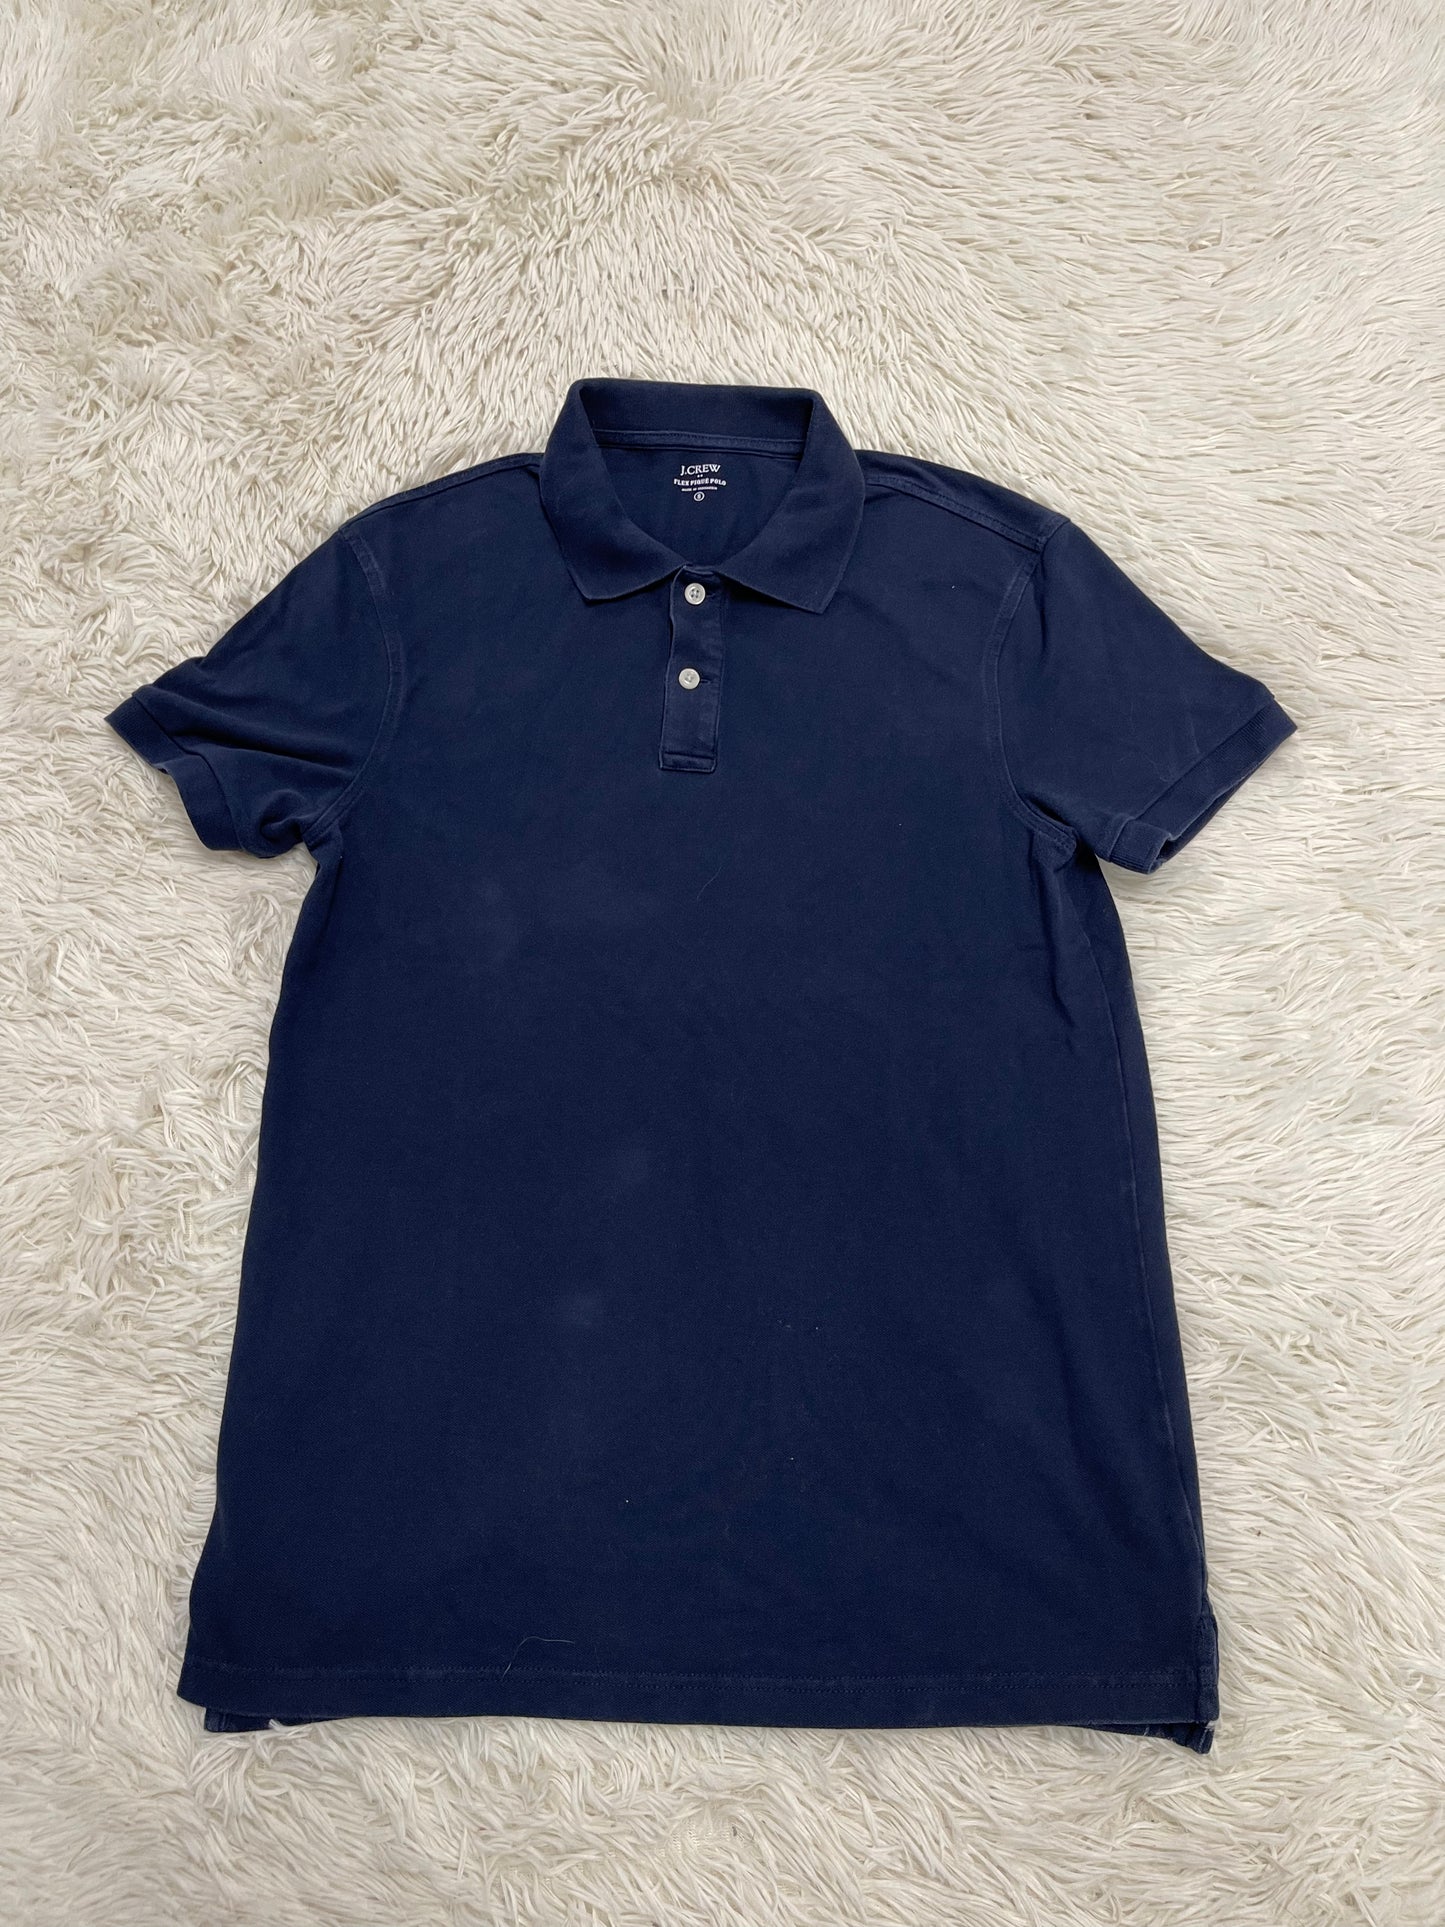 J. Crew Men's Polo Shirt Blue - Small